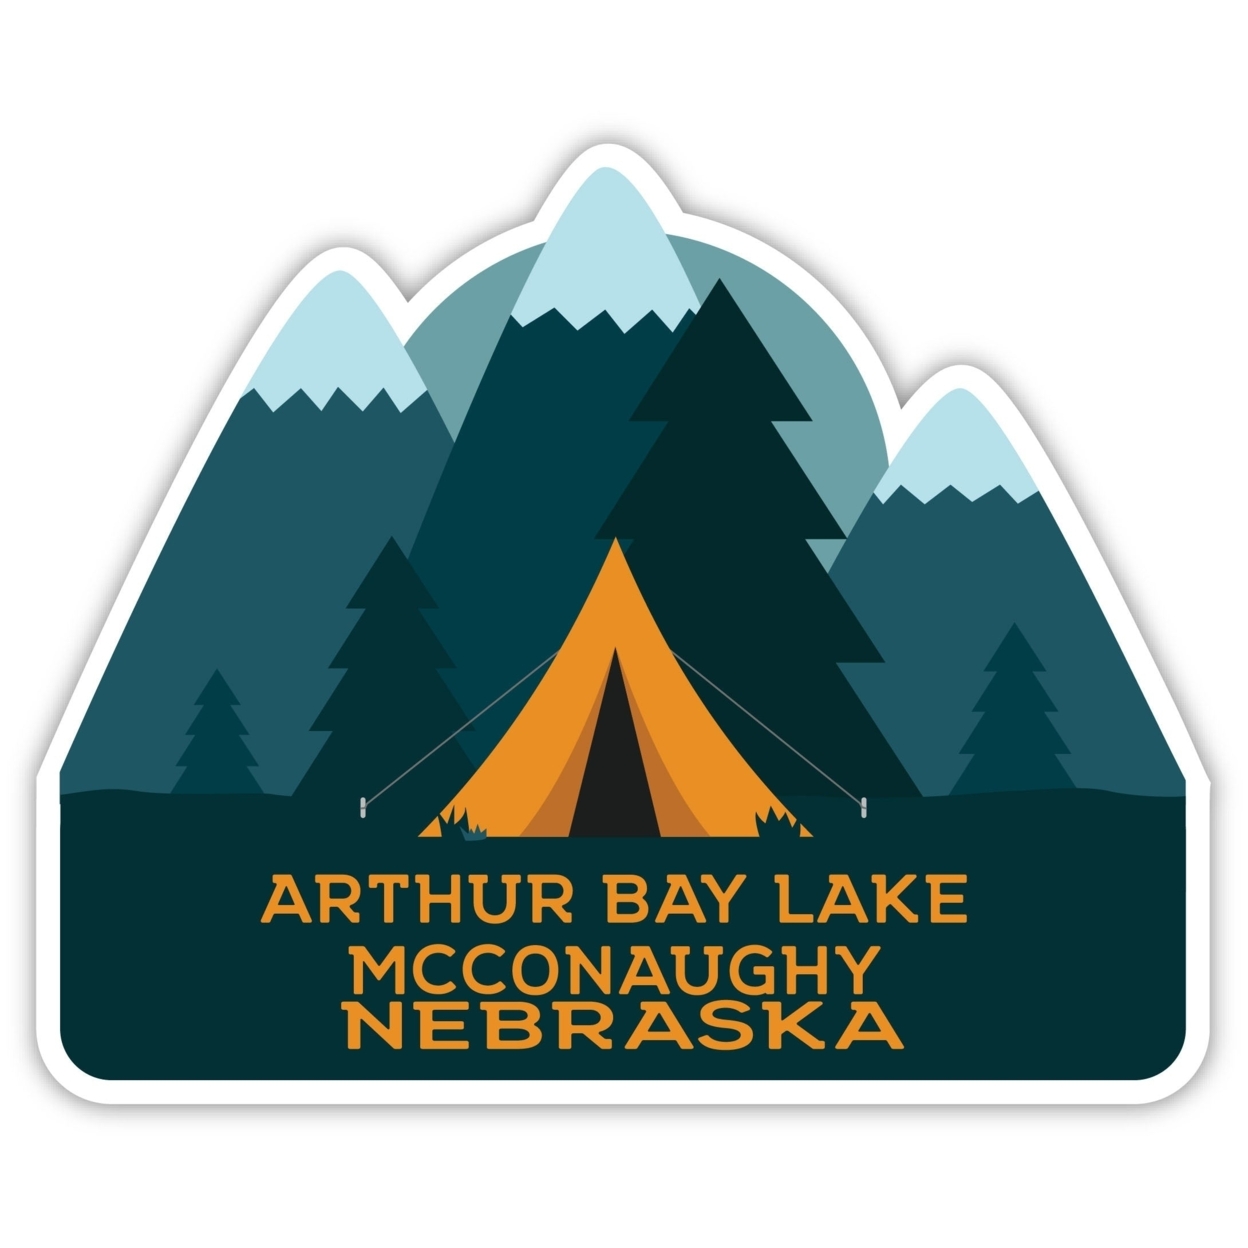 Arthur Bay Lake Mcconaughy Nebraska Souvenir Decorative Stickers (Choose Theme And Size) - 4-Pack, 12-Inch, Tent